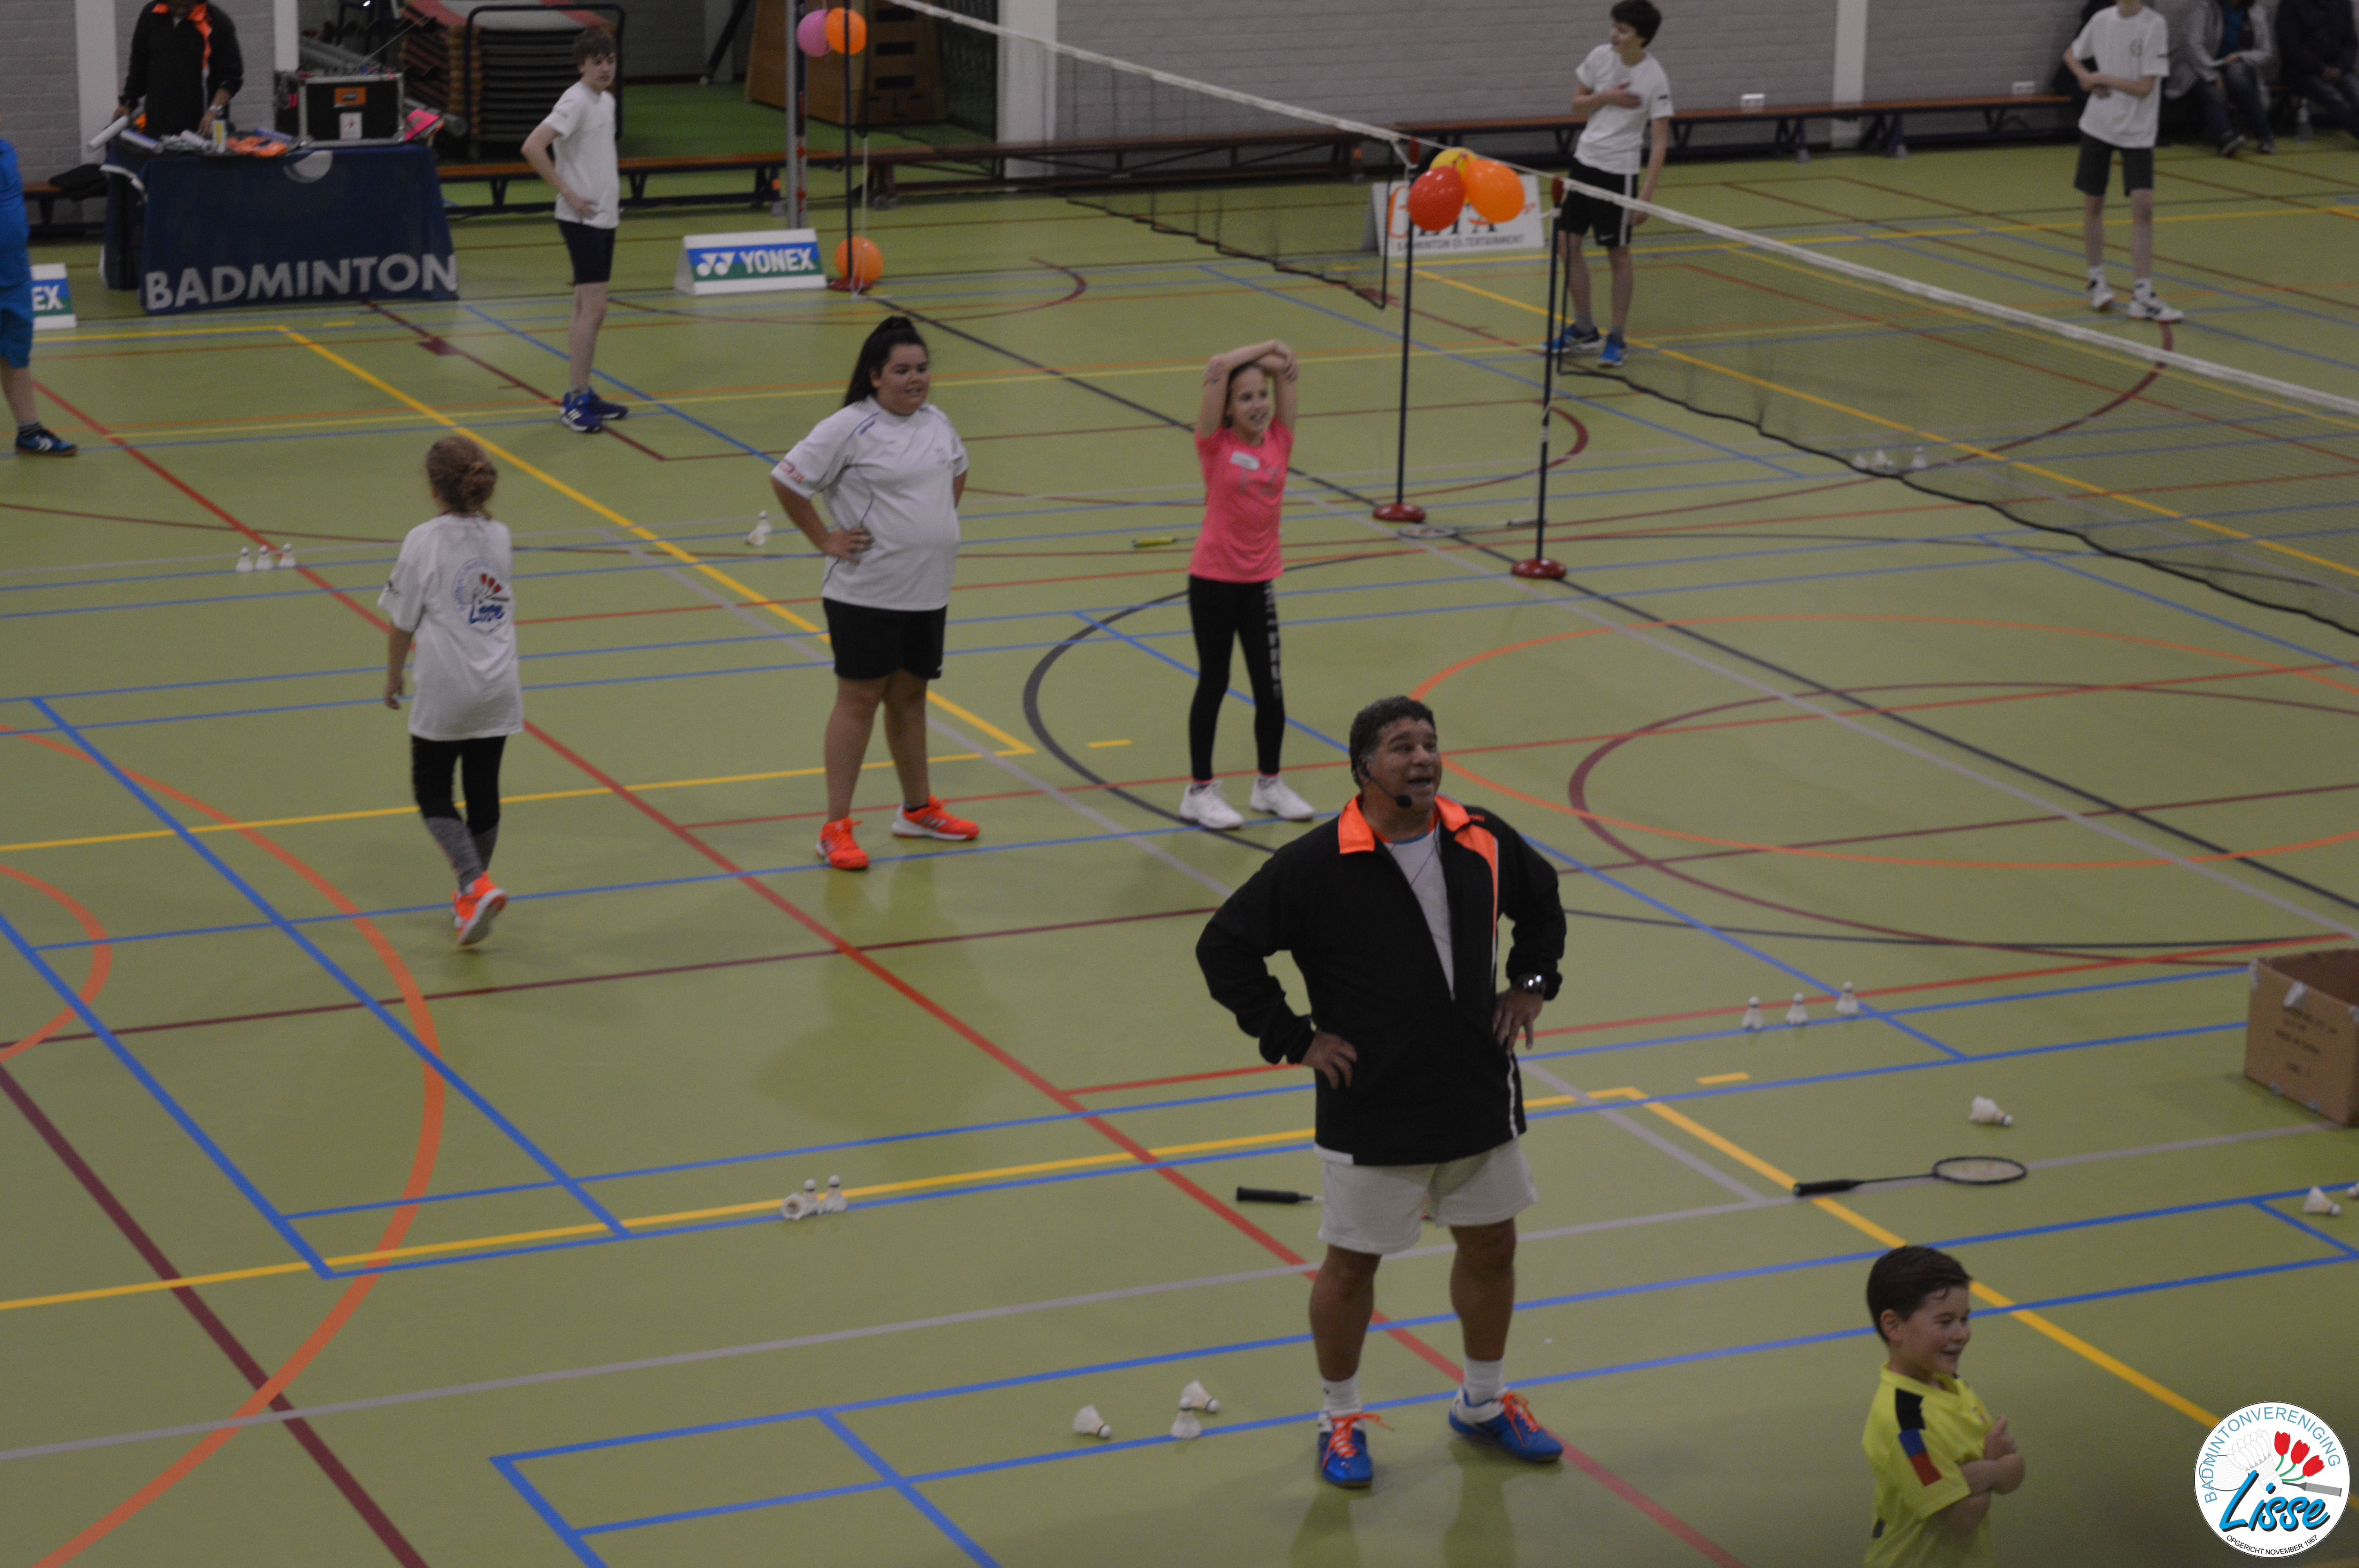 Clinic BETA Badminton